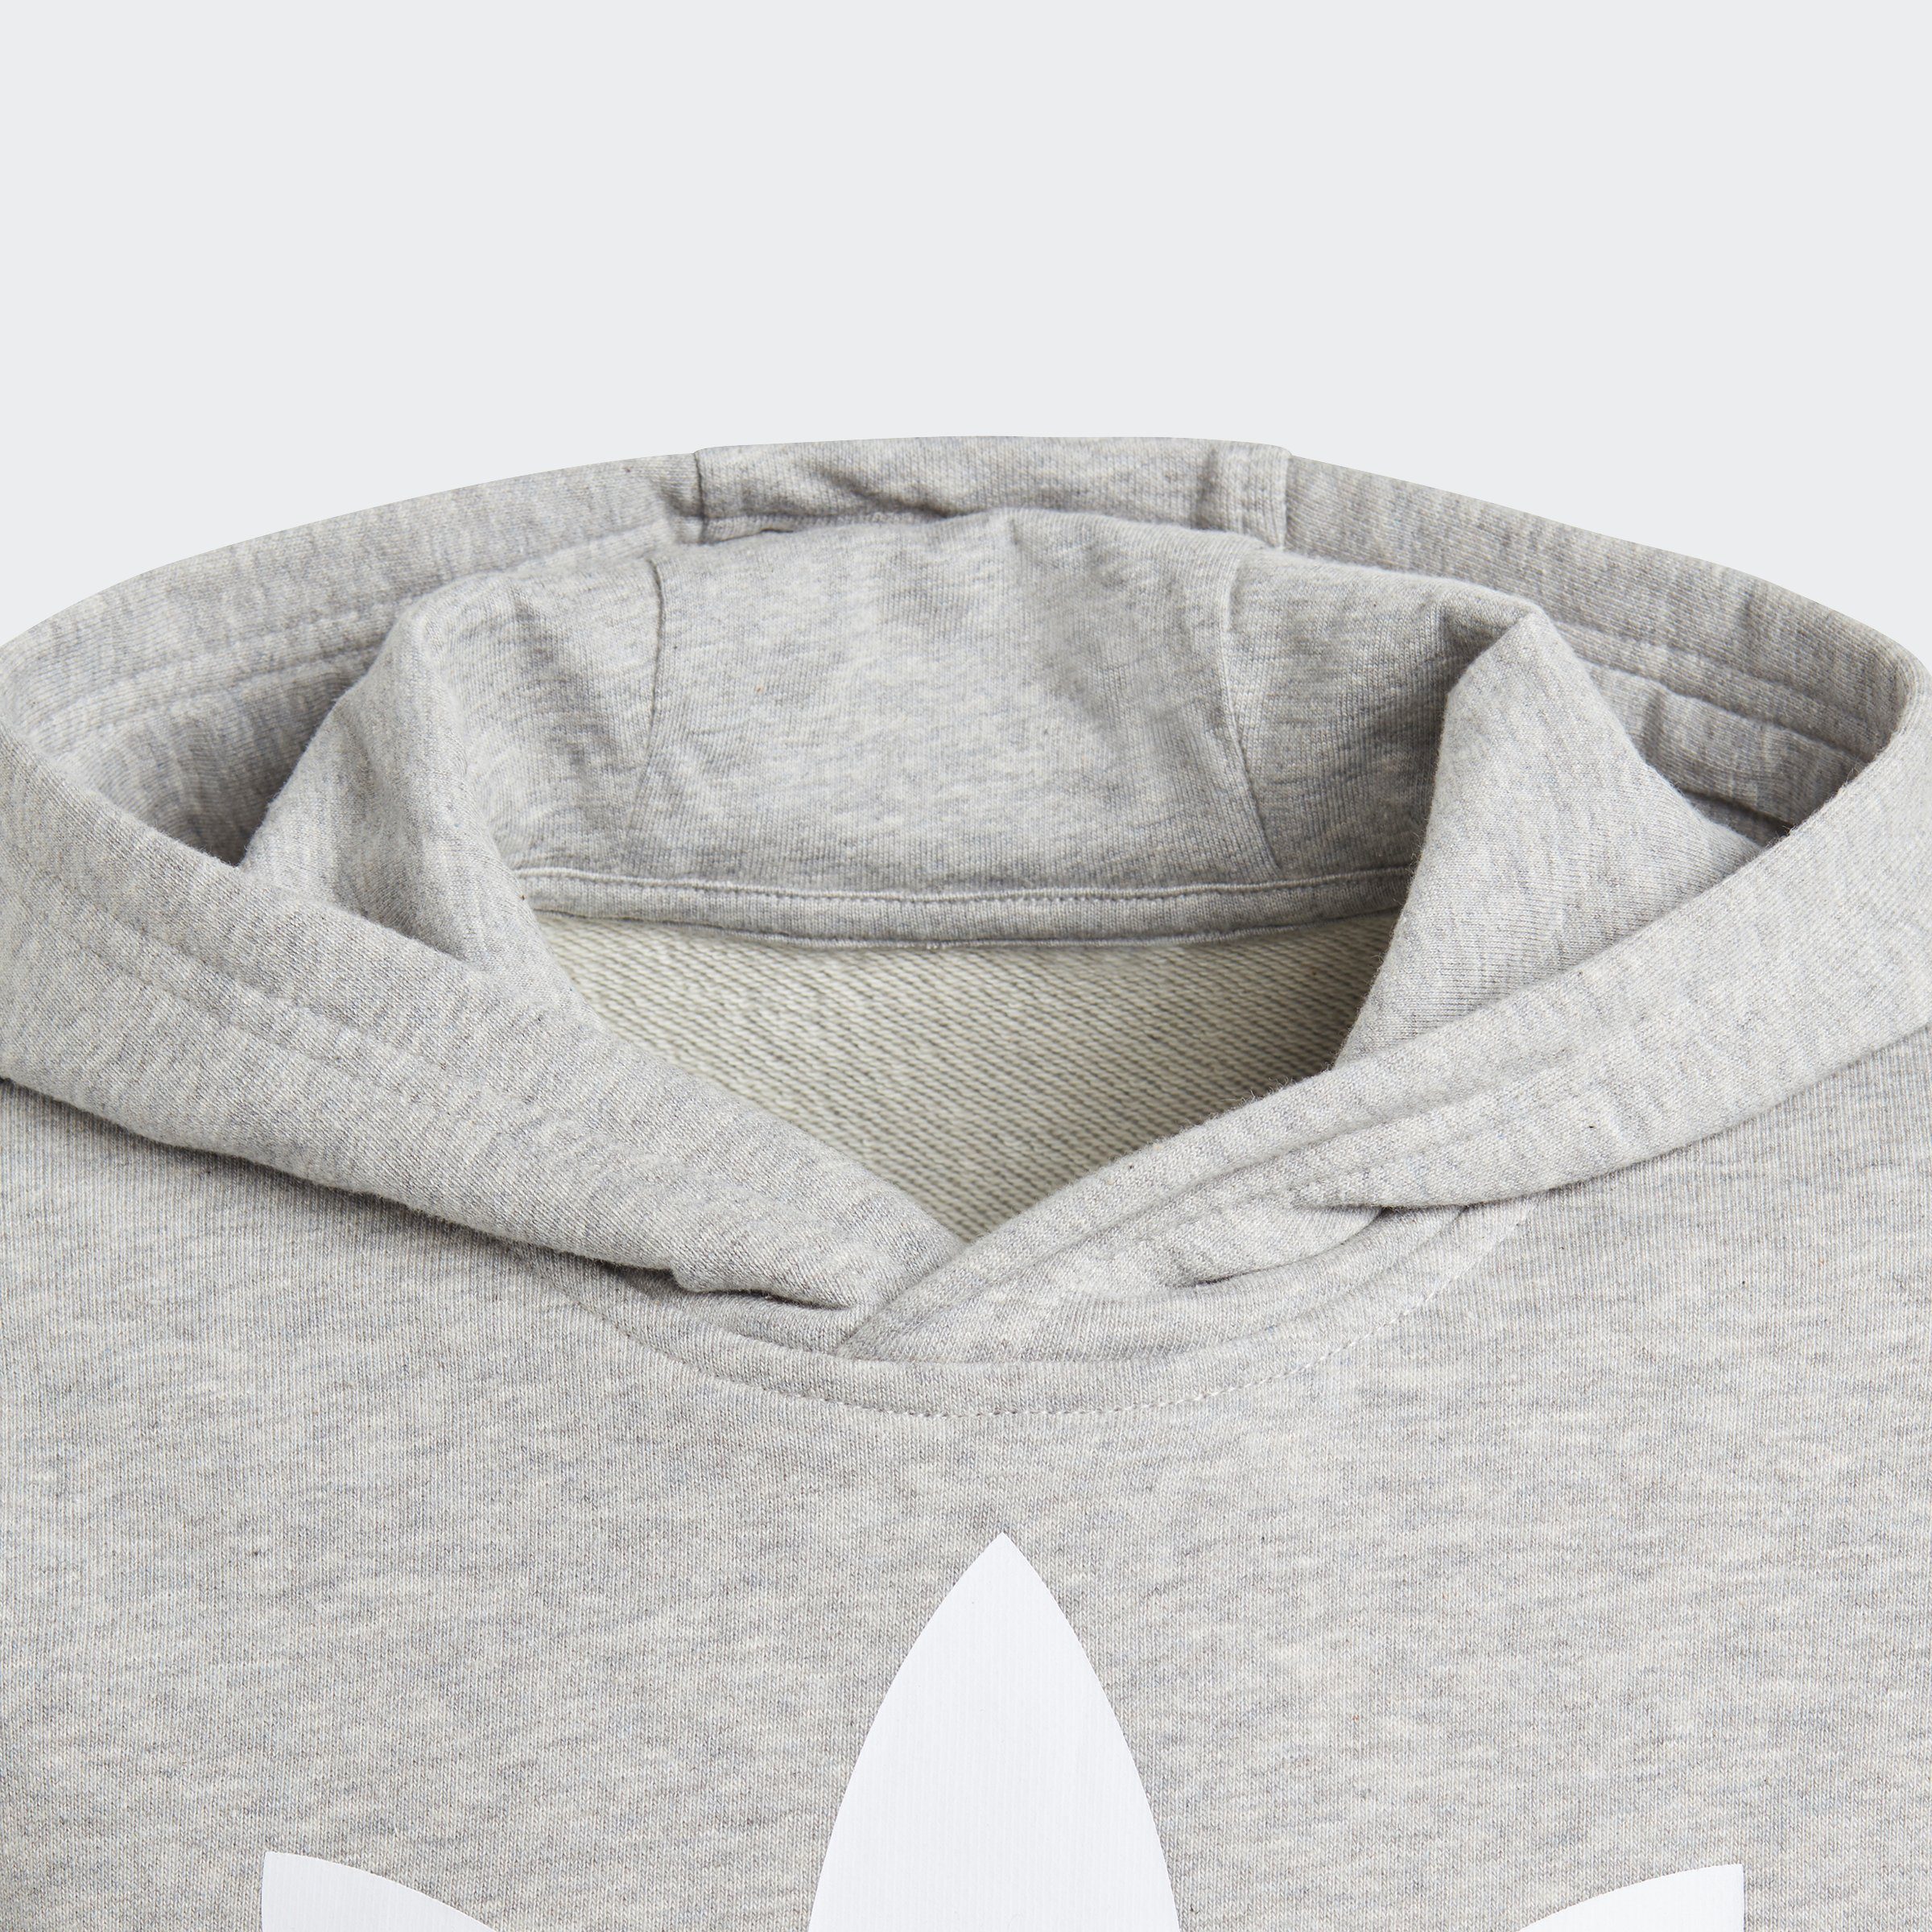 Sweatshirt HOODIE White Heather / Medium TREFOIL Originals adidas Grey